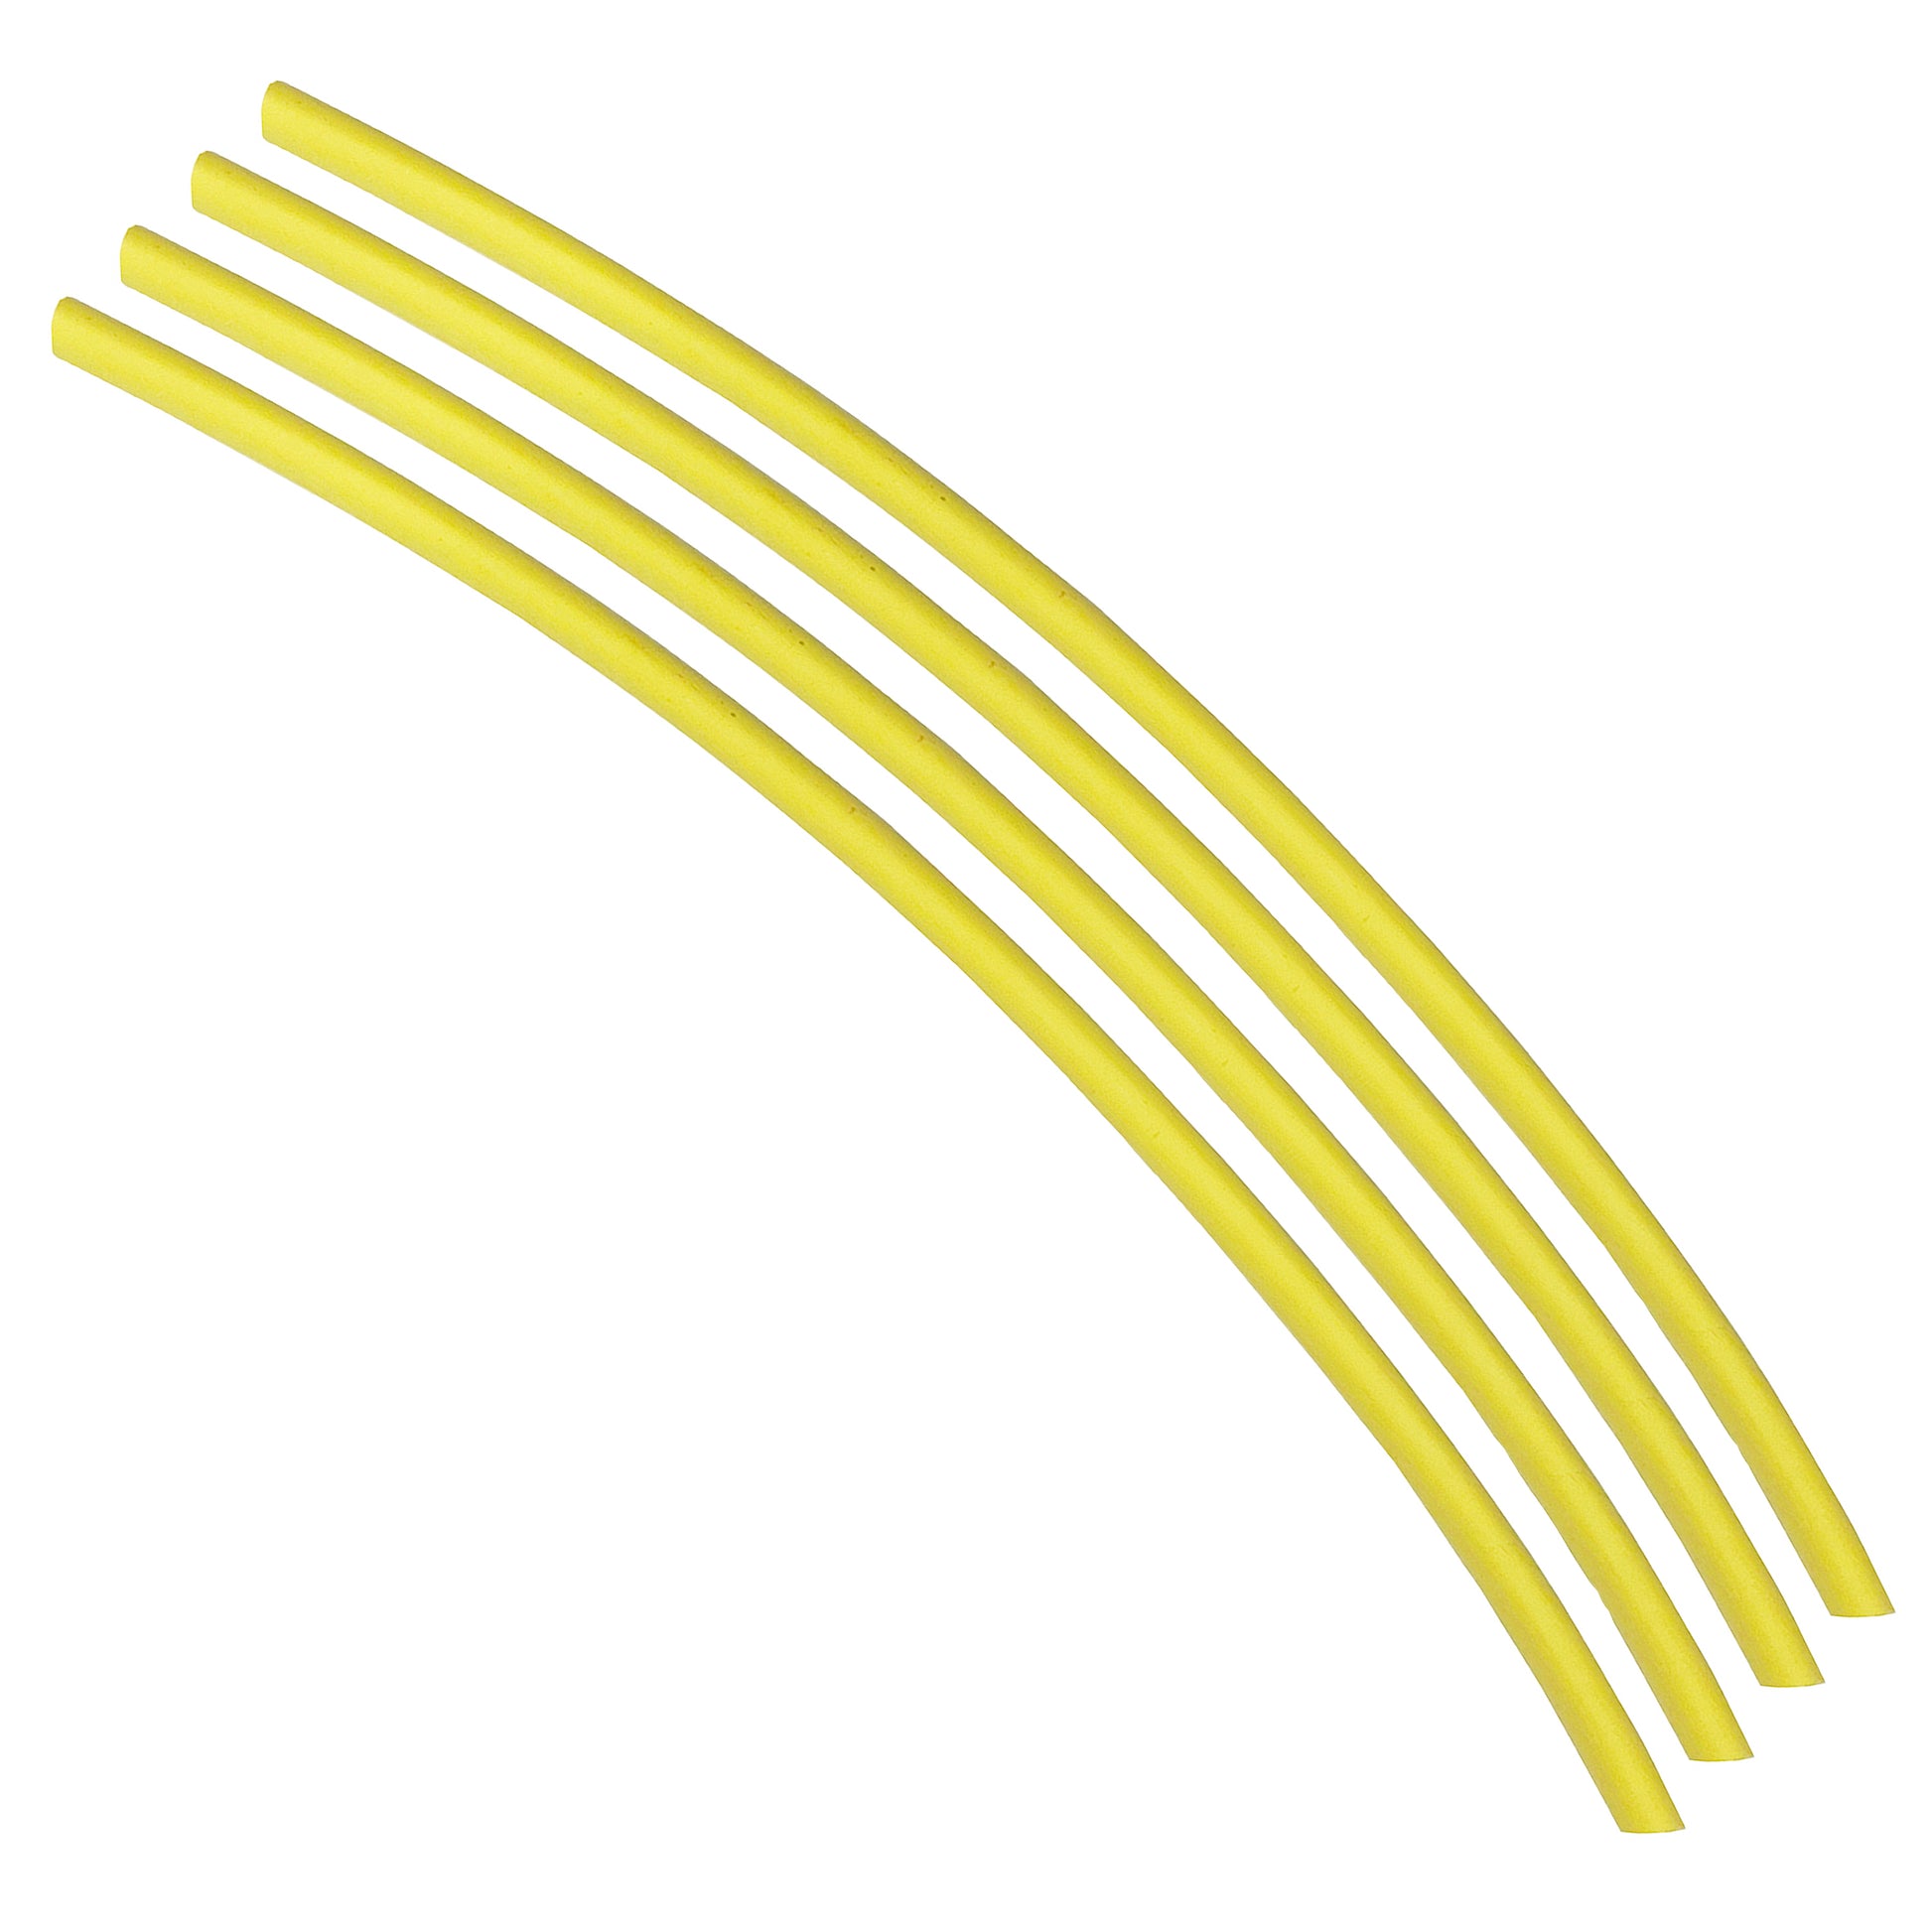 Flexible Thin Single Wall Non-Adhesive Heat Shrink Tubing 2:1 Yellow 1/4" ID - 100' Ft Spool